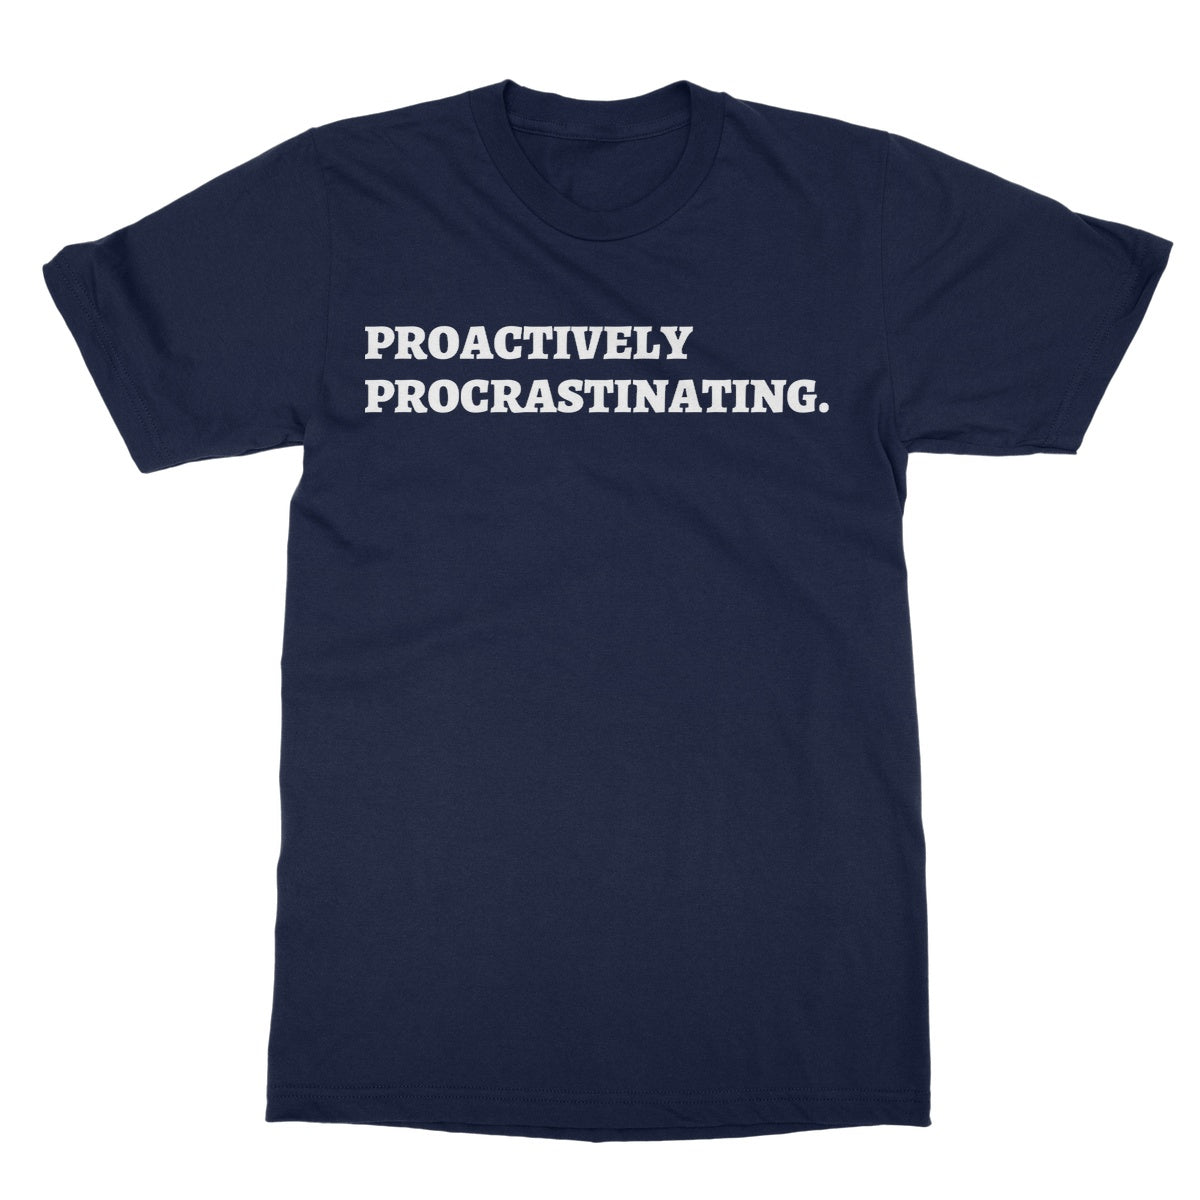 proactively procrastinating t shirt navy